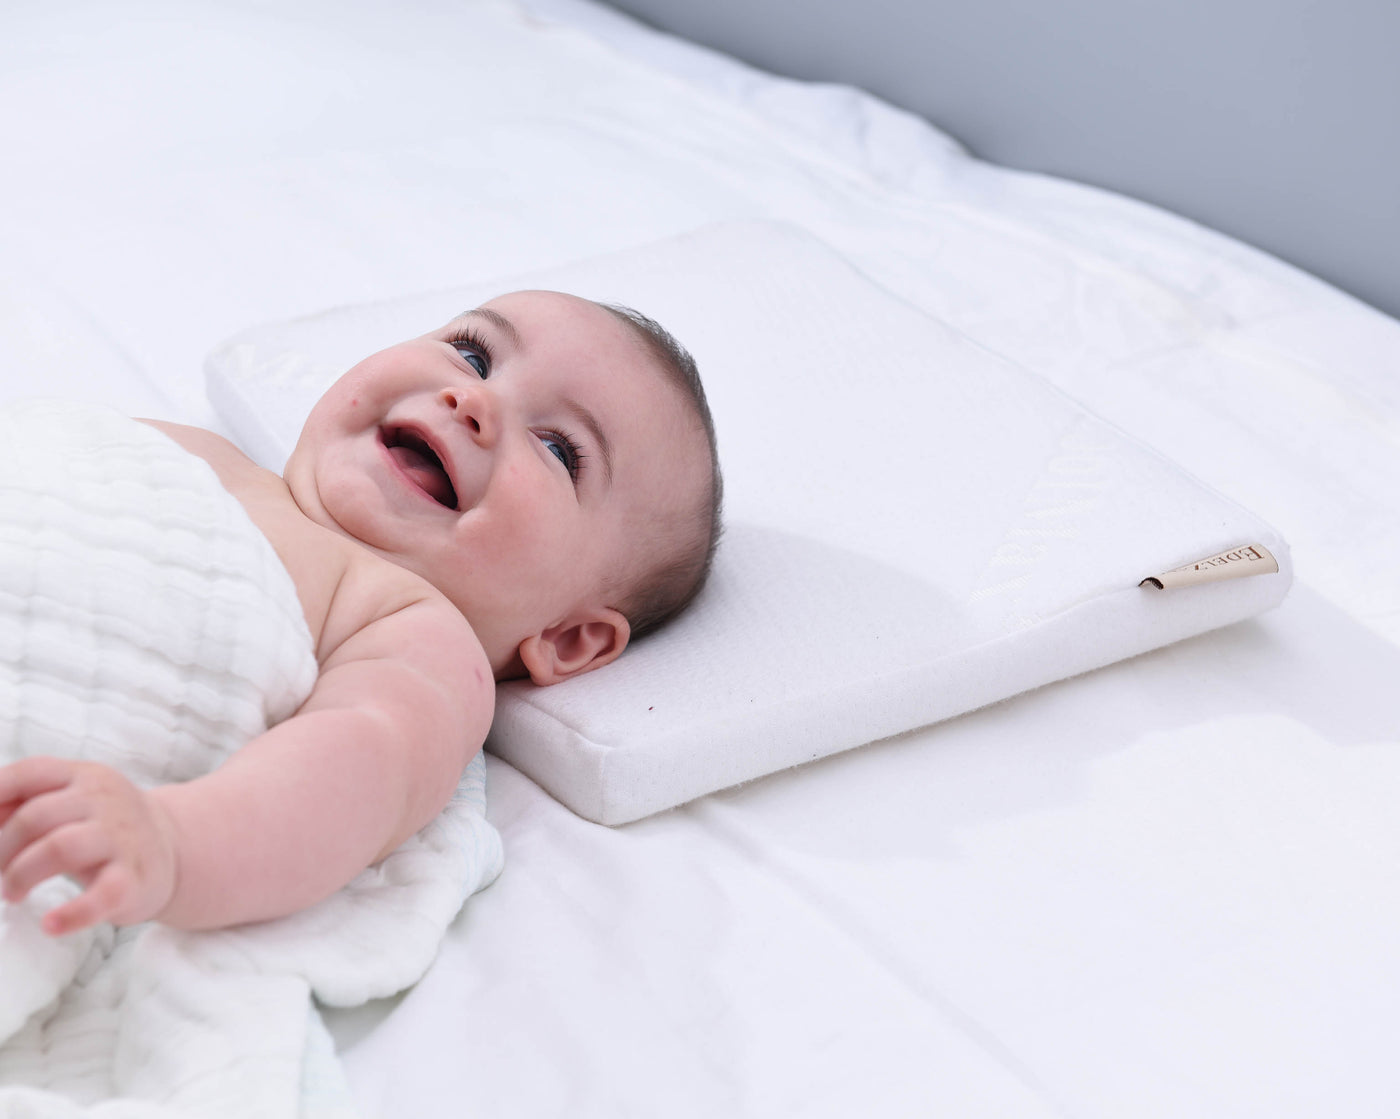 Mombella LCY Cool Aqua Foam Infant &Toddler’s Contour Pillow Newborn-6 months - mombella